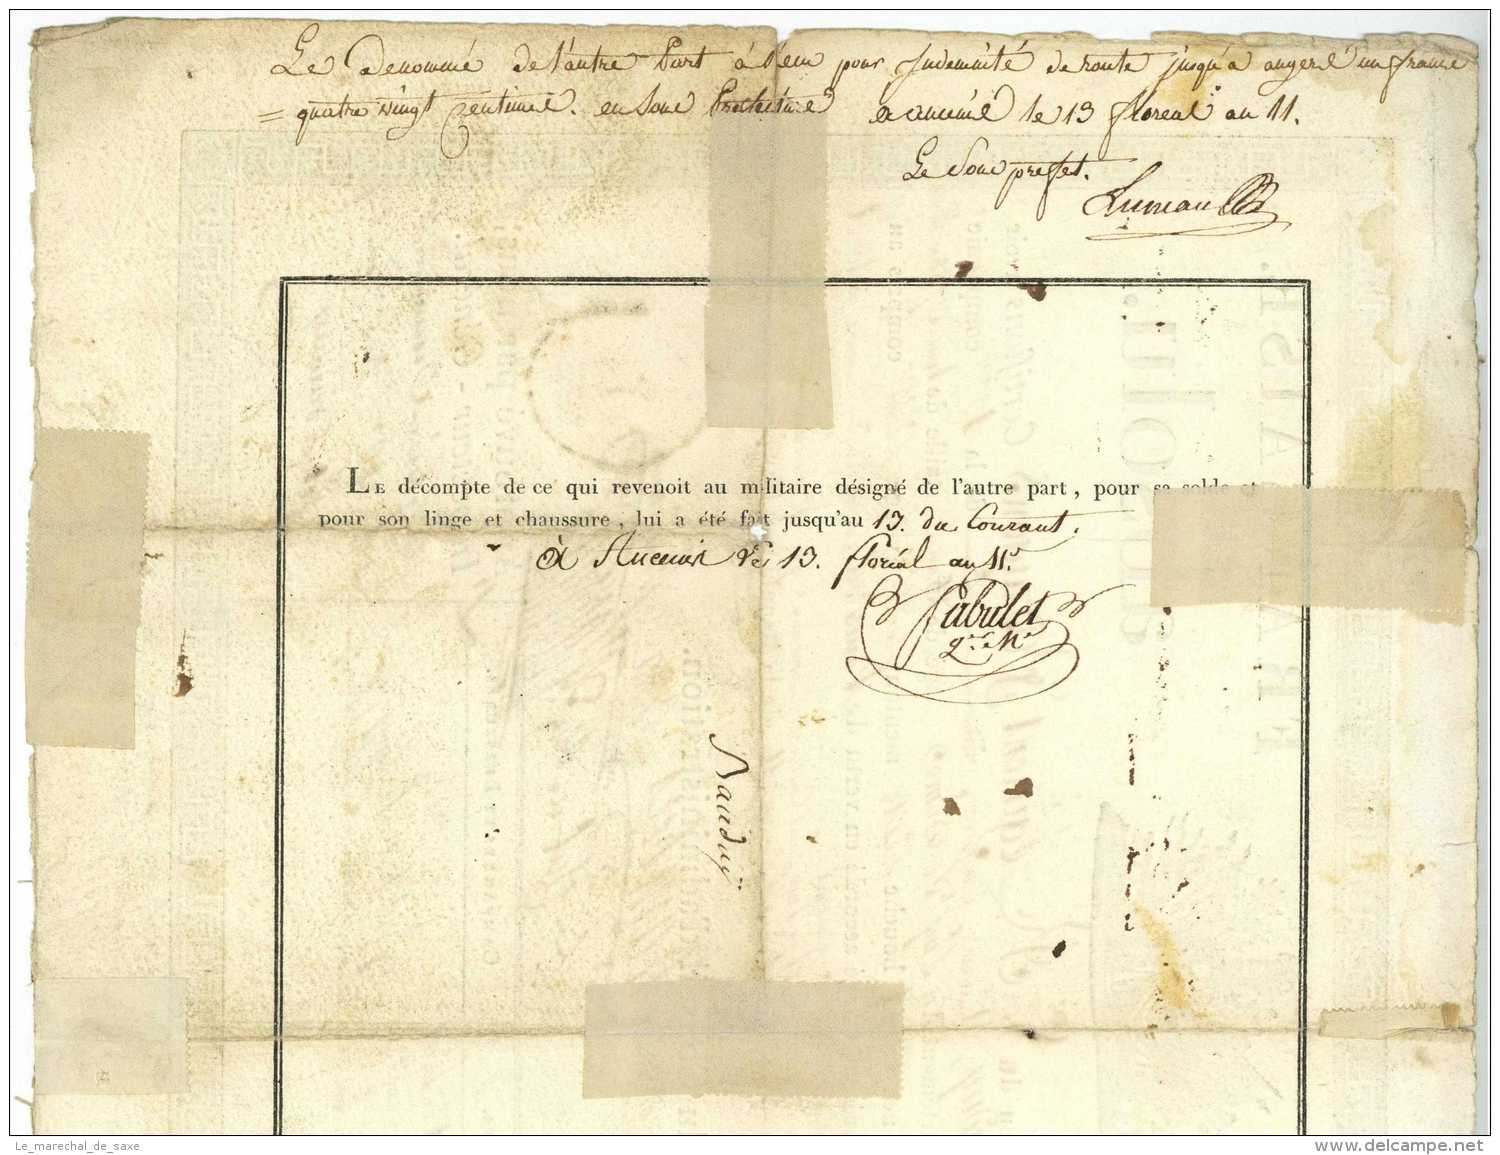 1er REGIMENT DE DRAGONS - 1803 - P.S. VIALLANES, DU MUY Generaux - Watrin Rouzian Fiche Fabulet Chambert - Historical Documents